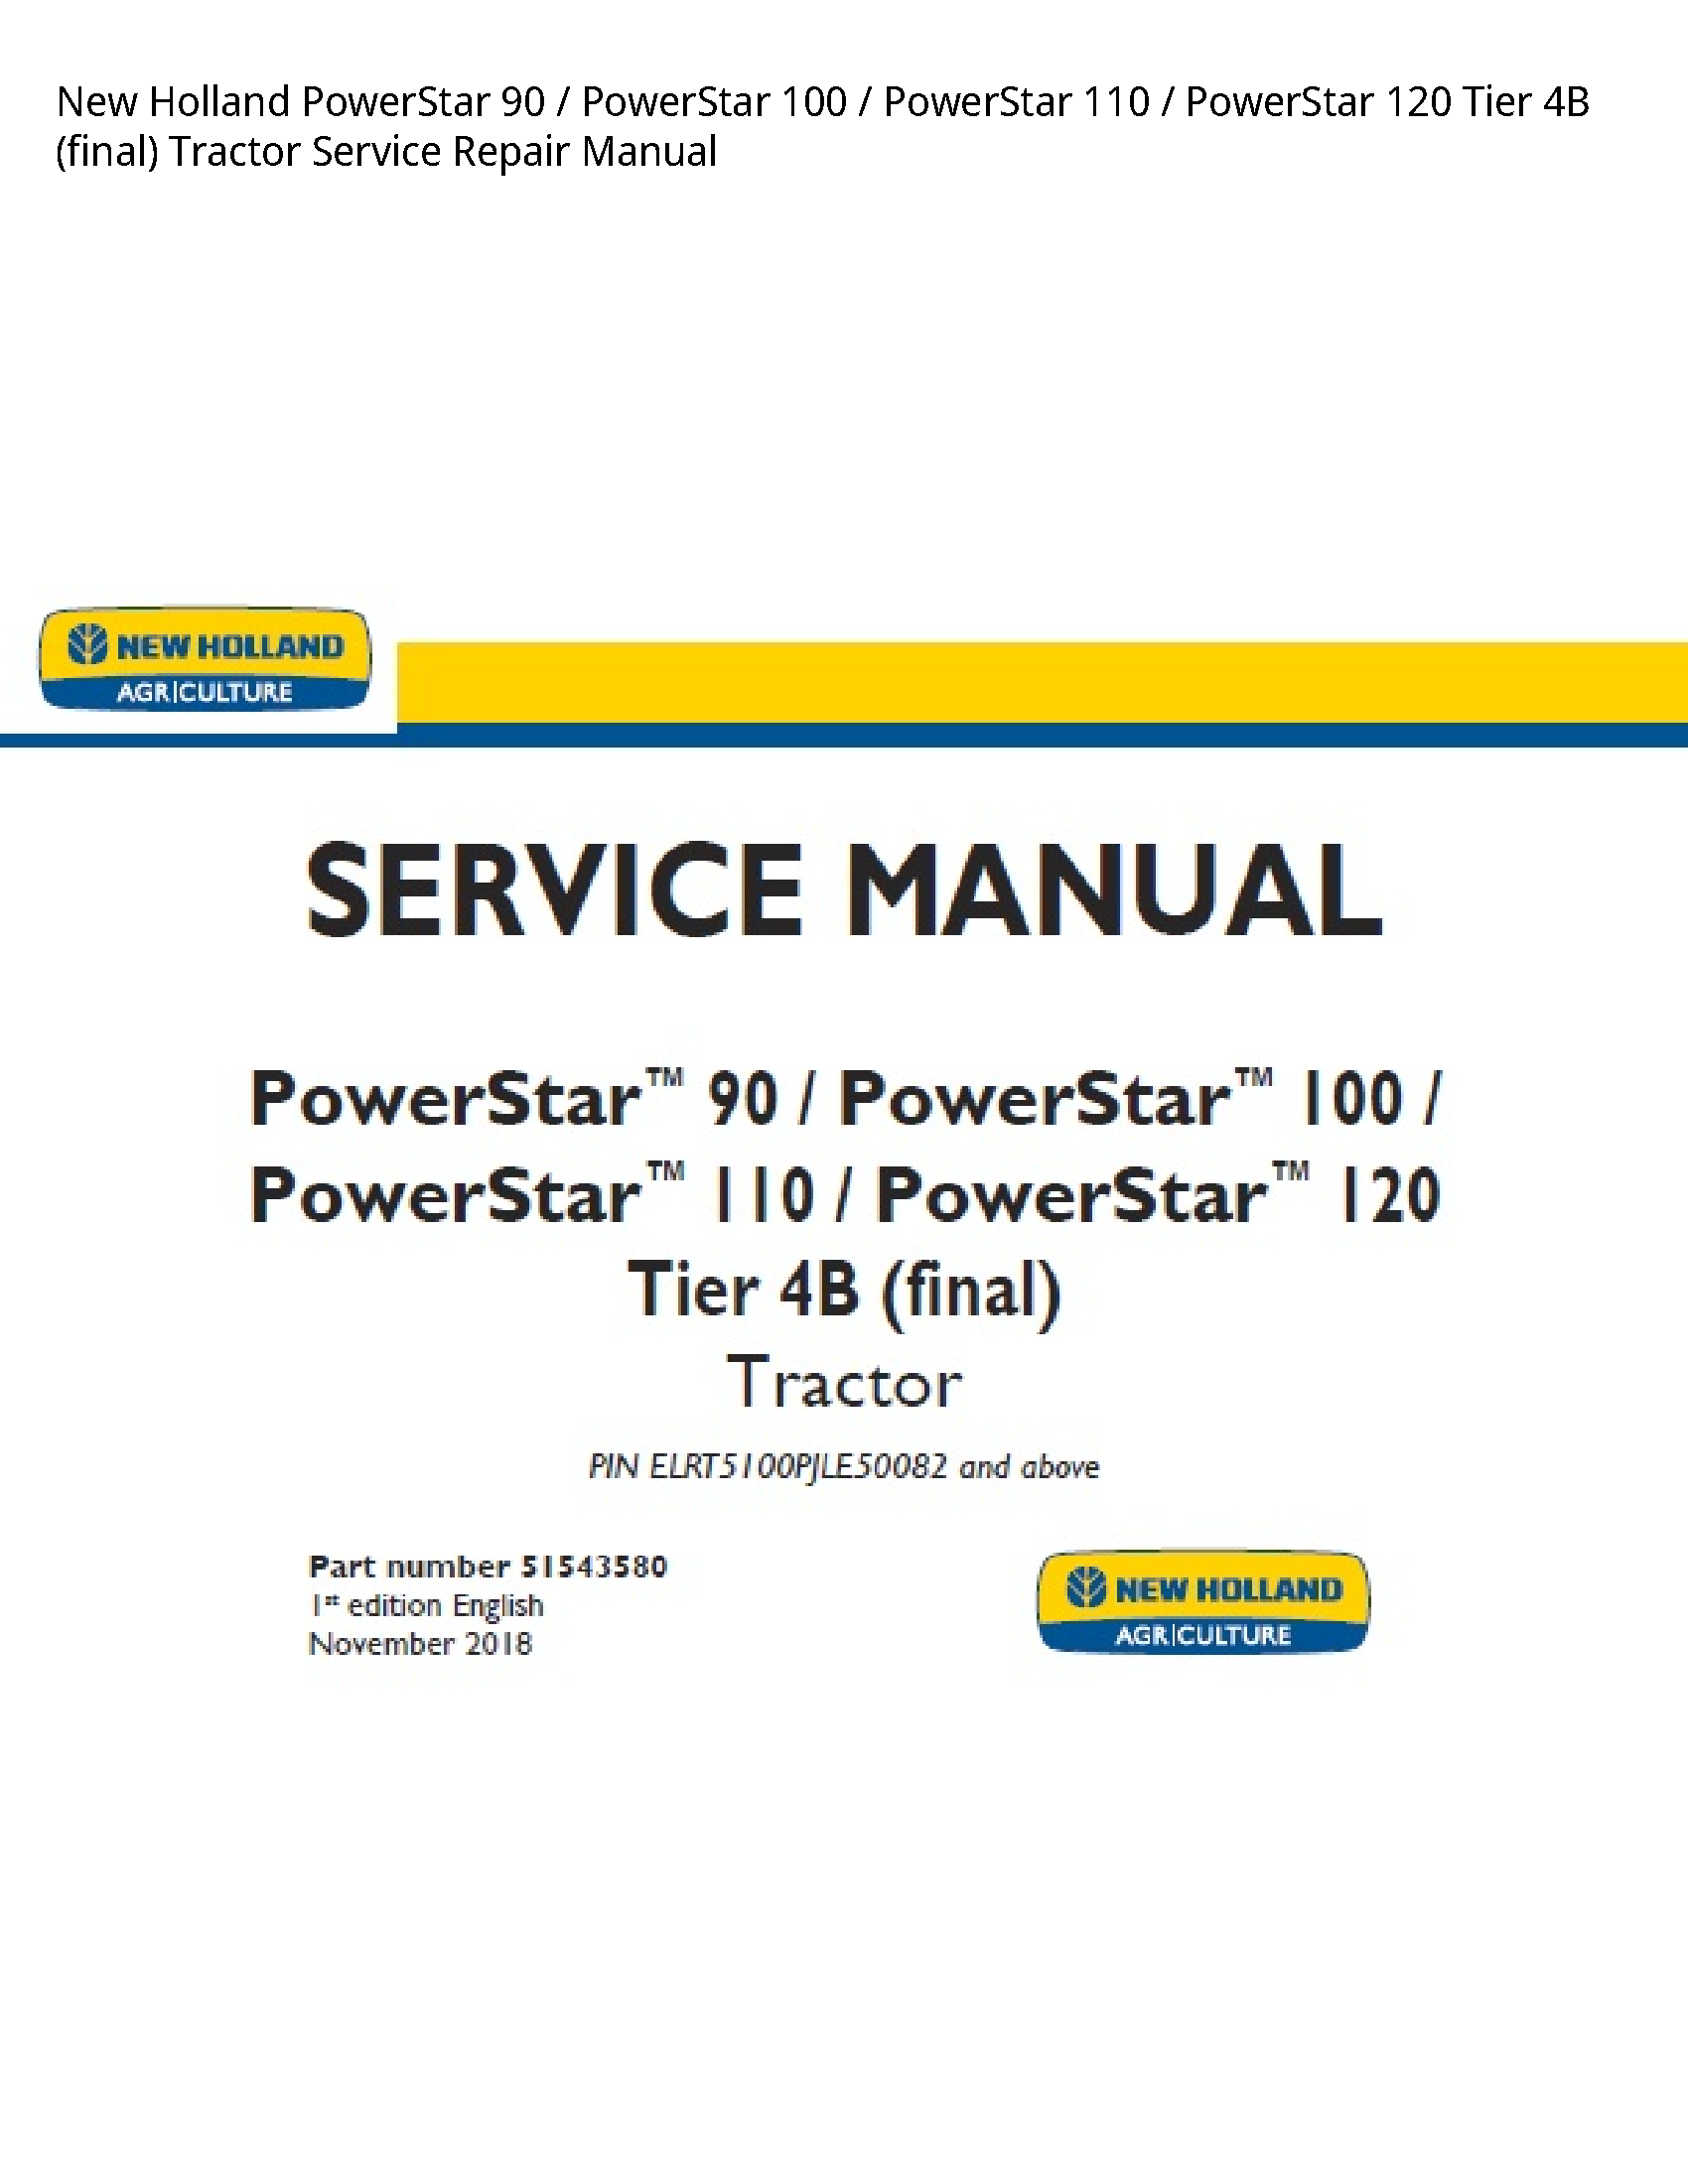 New Holland 90 PowerStar PowerStar PowerStar PowerStar Tier (final) Tractor manual